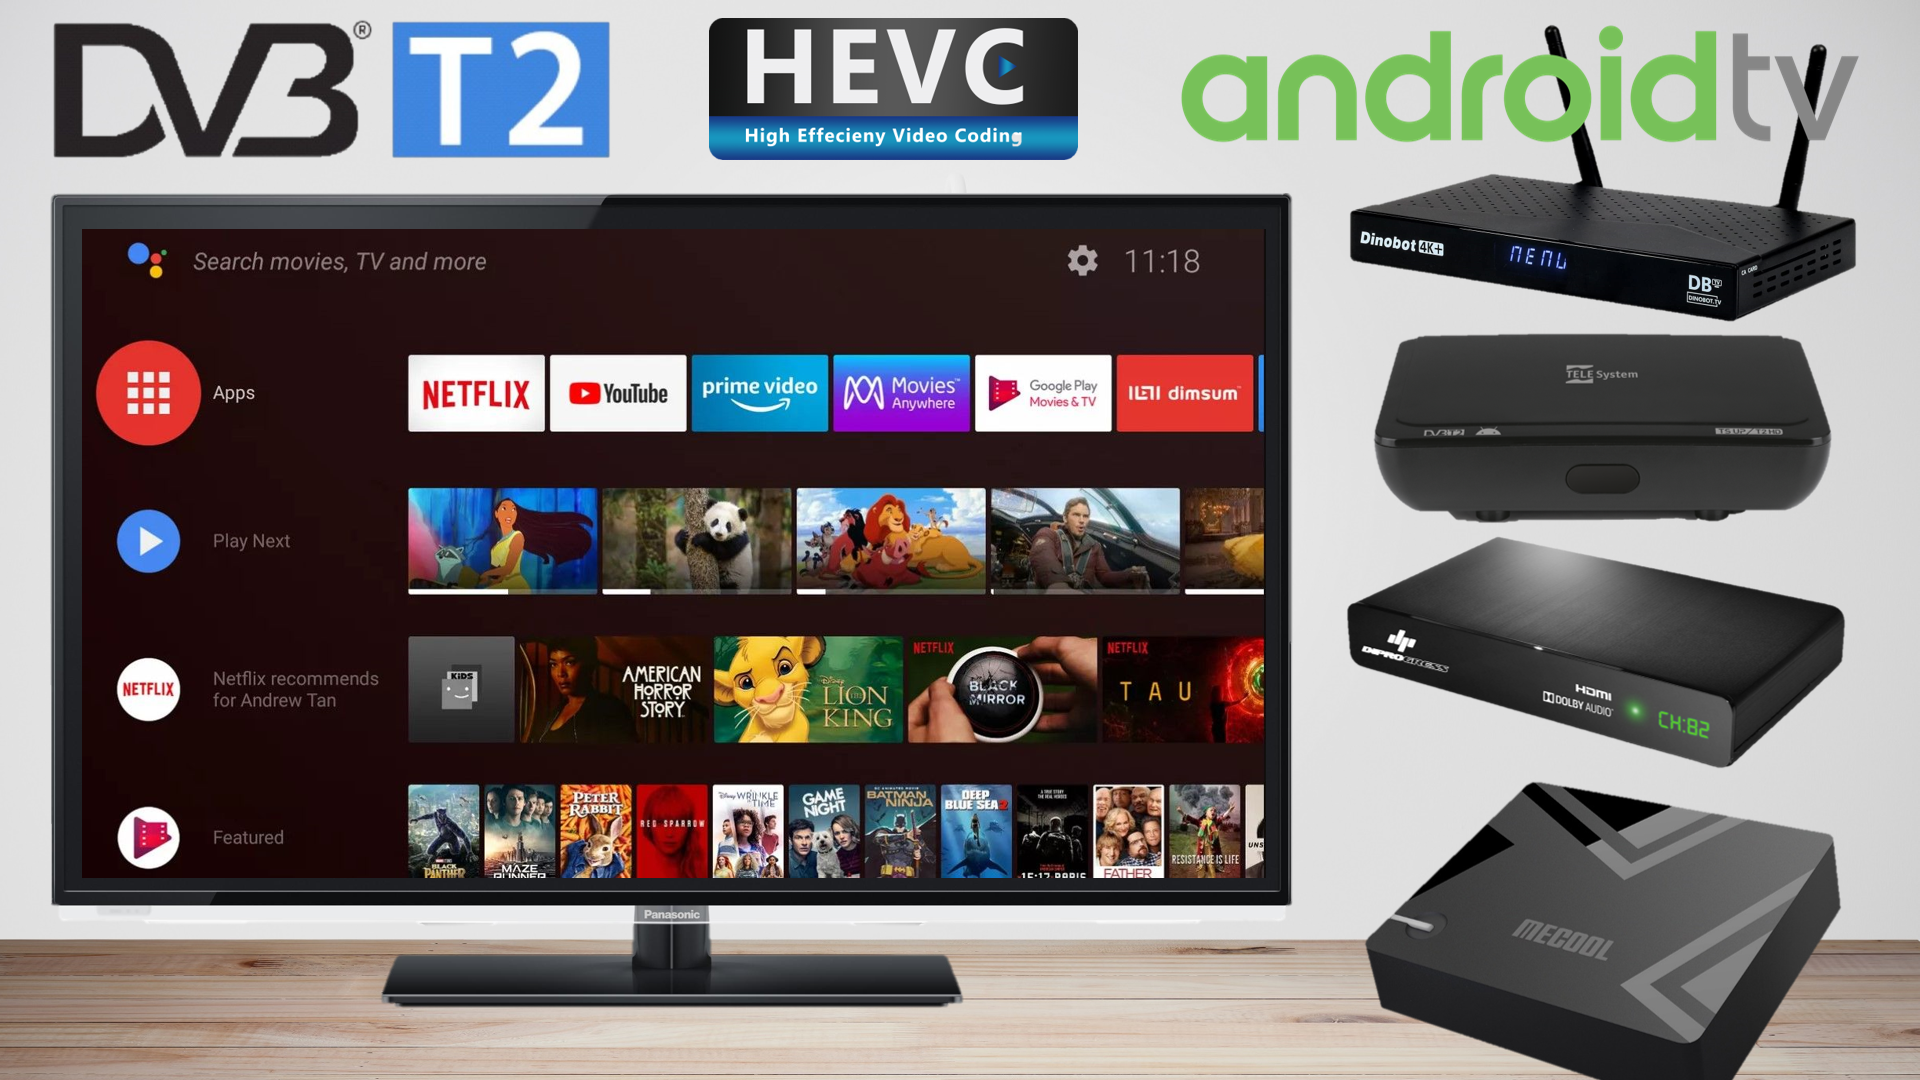 Android TV Box DVB-T2 decoder digitale terrestre: trasformare TV in smart TV